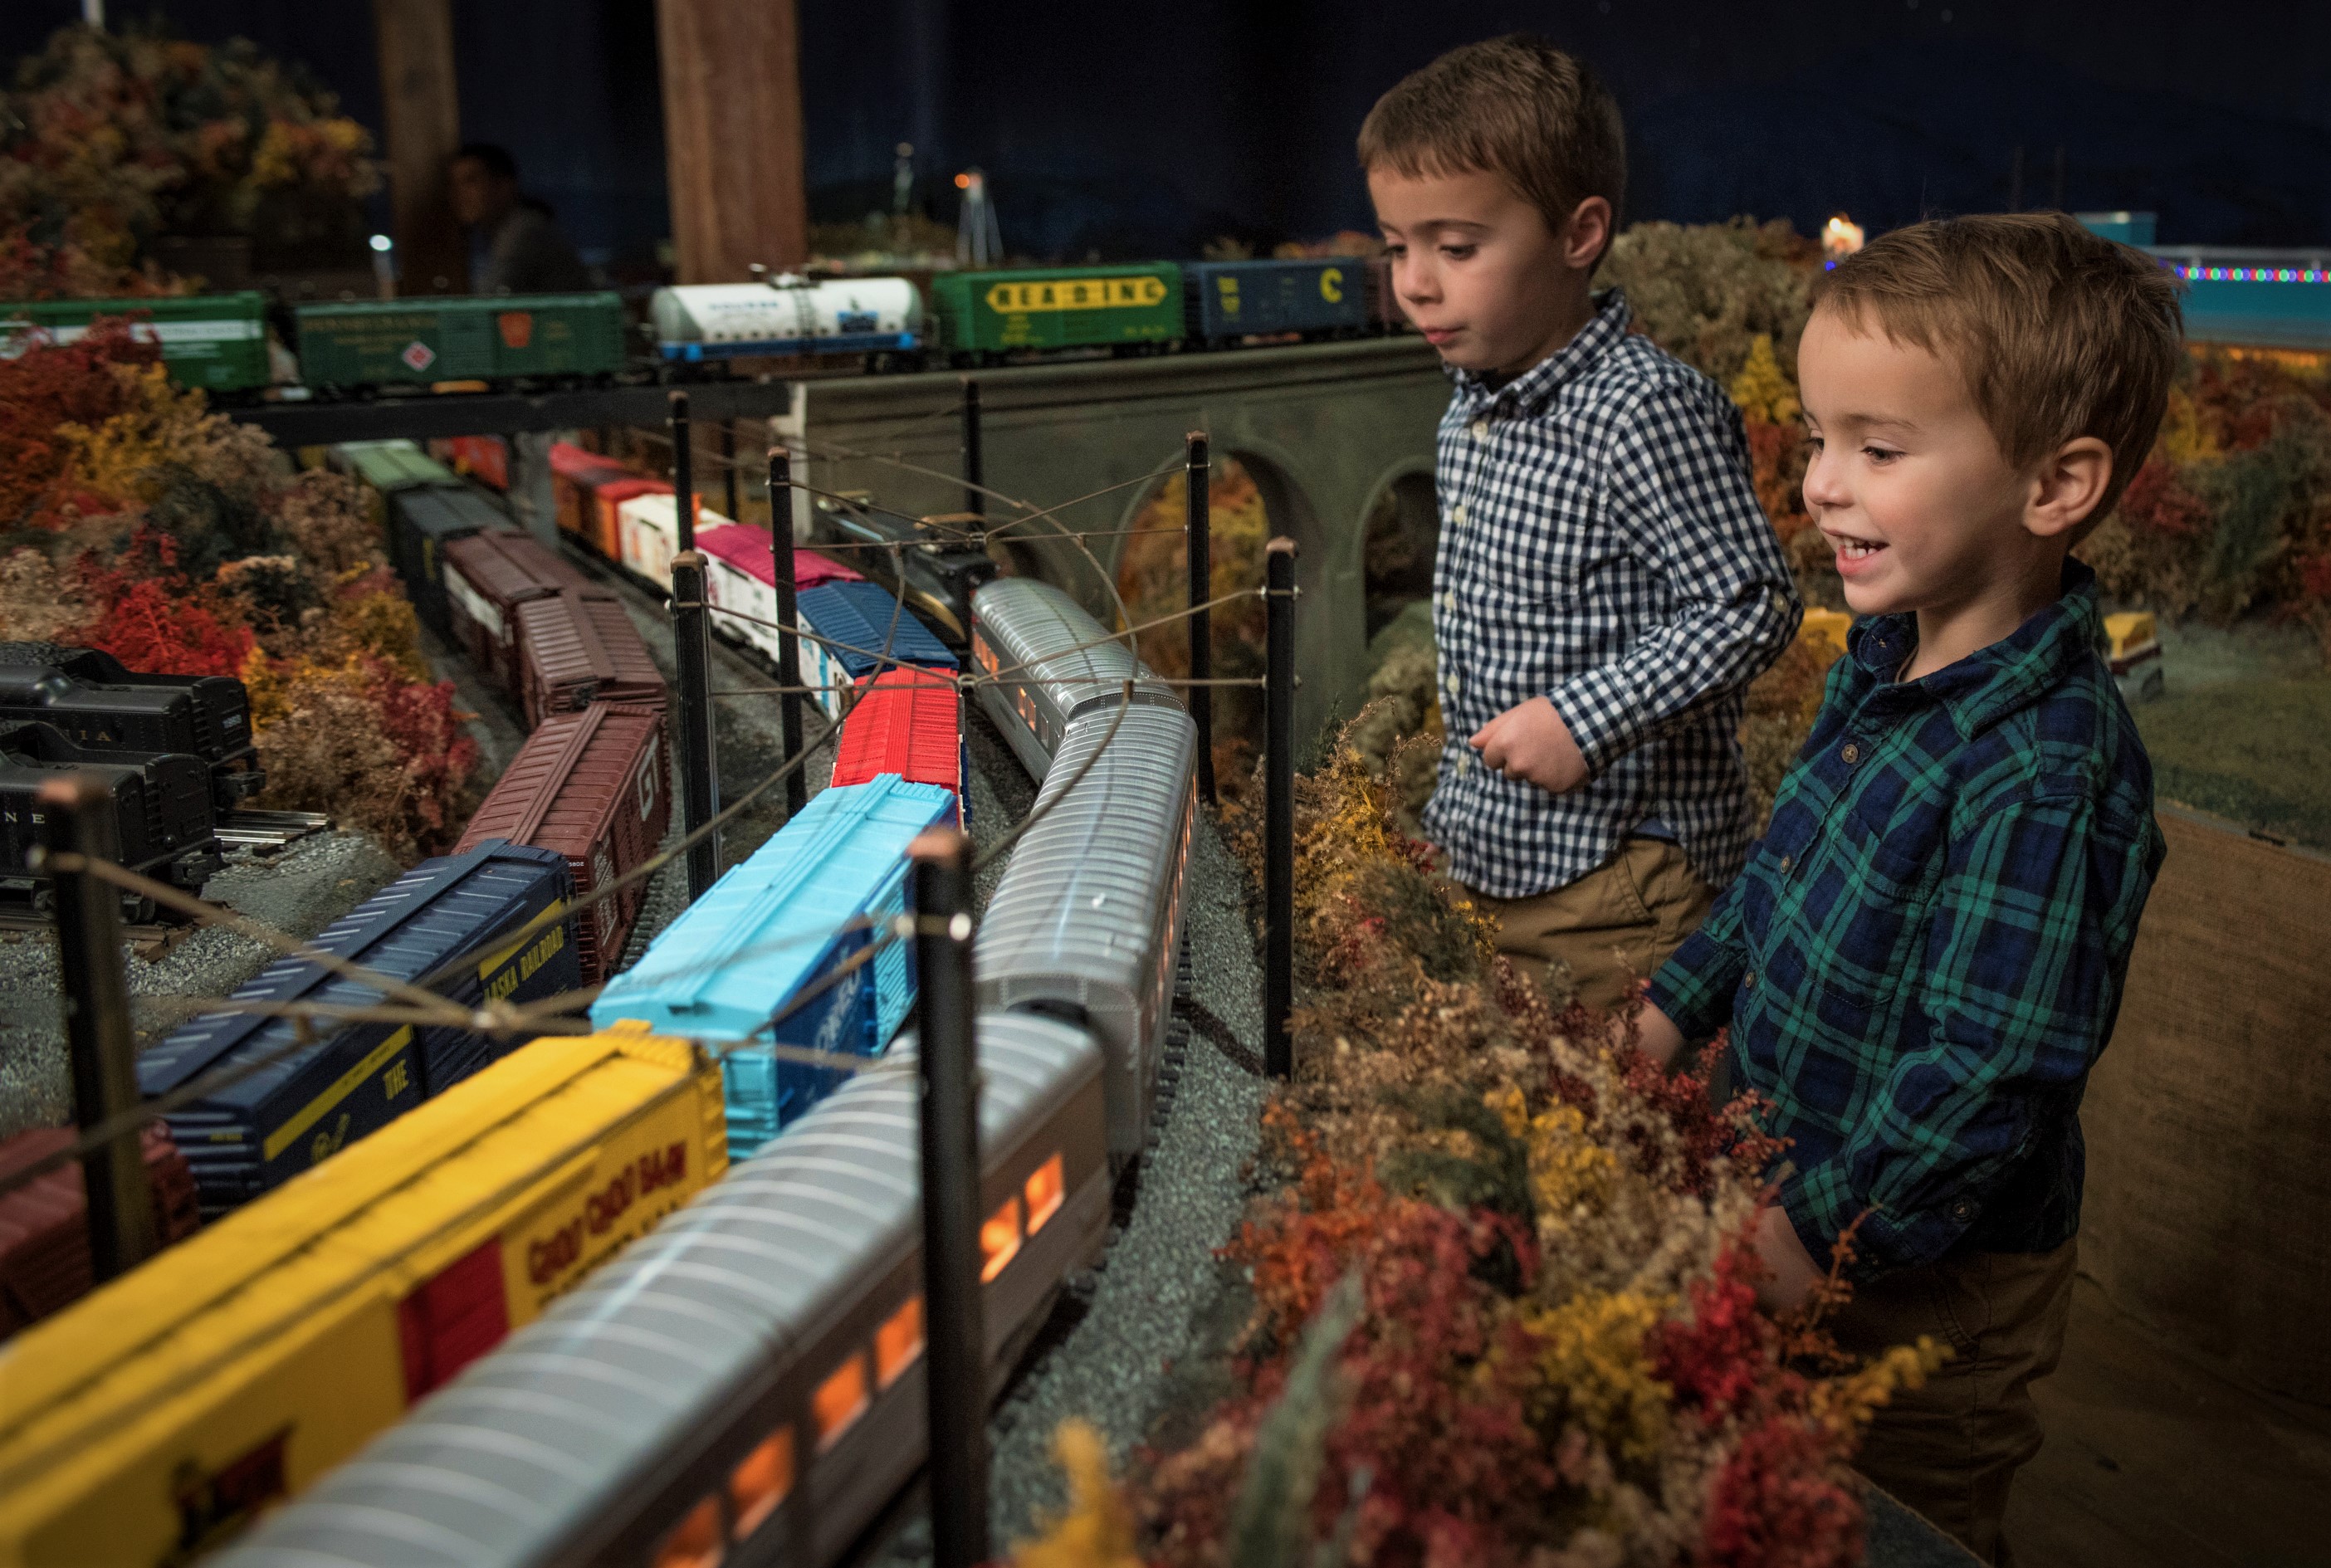 Kids looking at train display